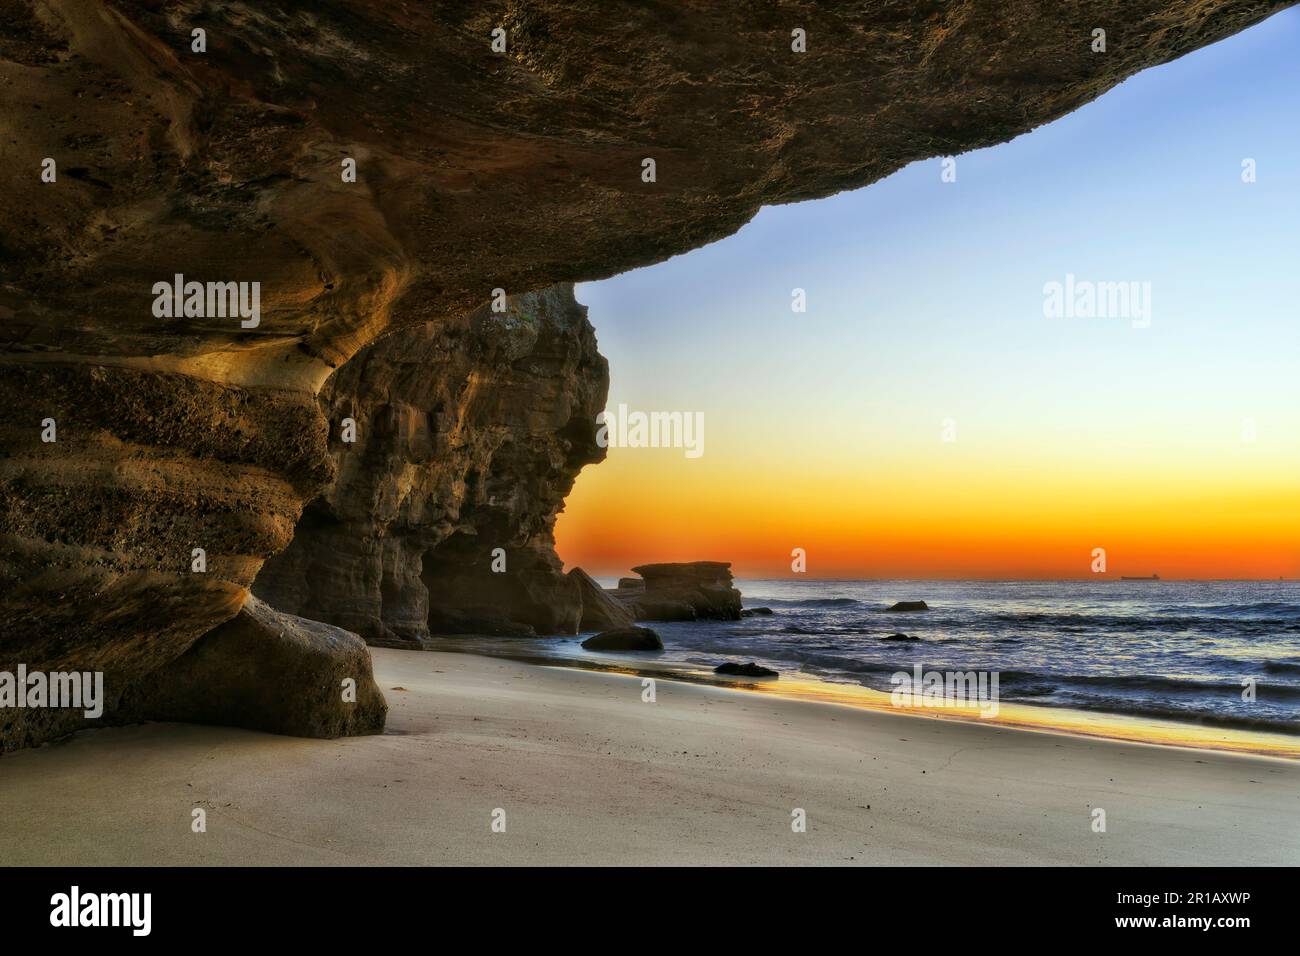 Sandsteinfelsen Meereshöhle am Caves Beach Pazifikküste Australiens bei Sonnenaufgang - malerische Meereslandschaft. Stockfoto